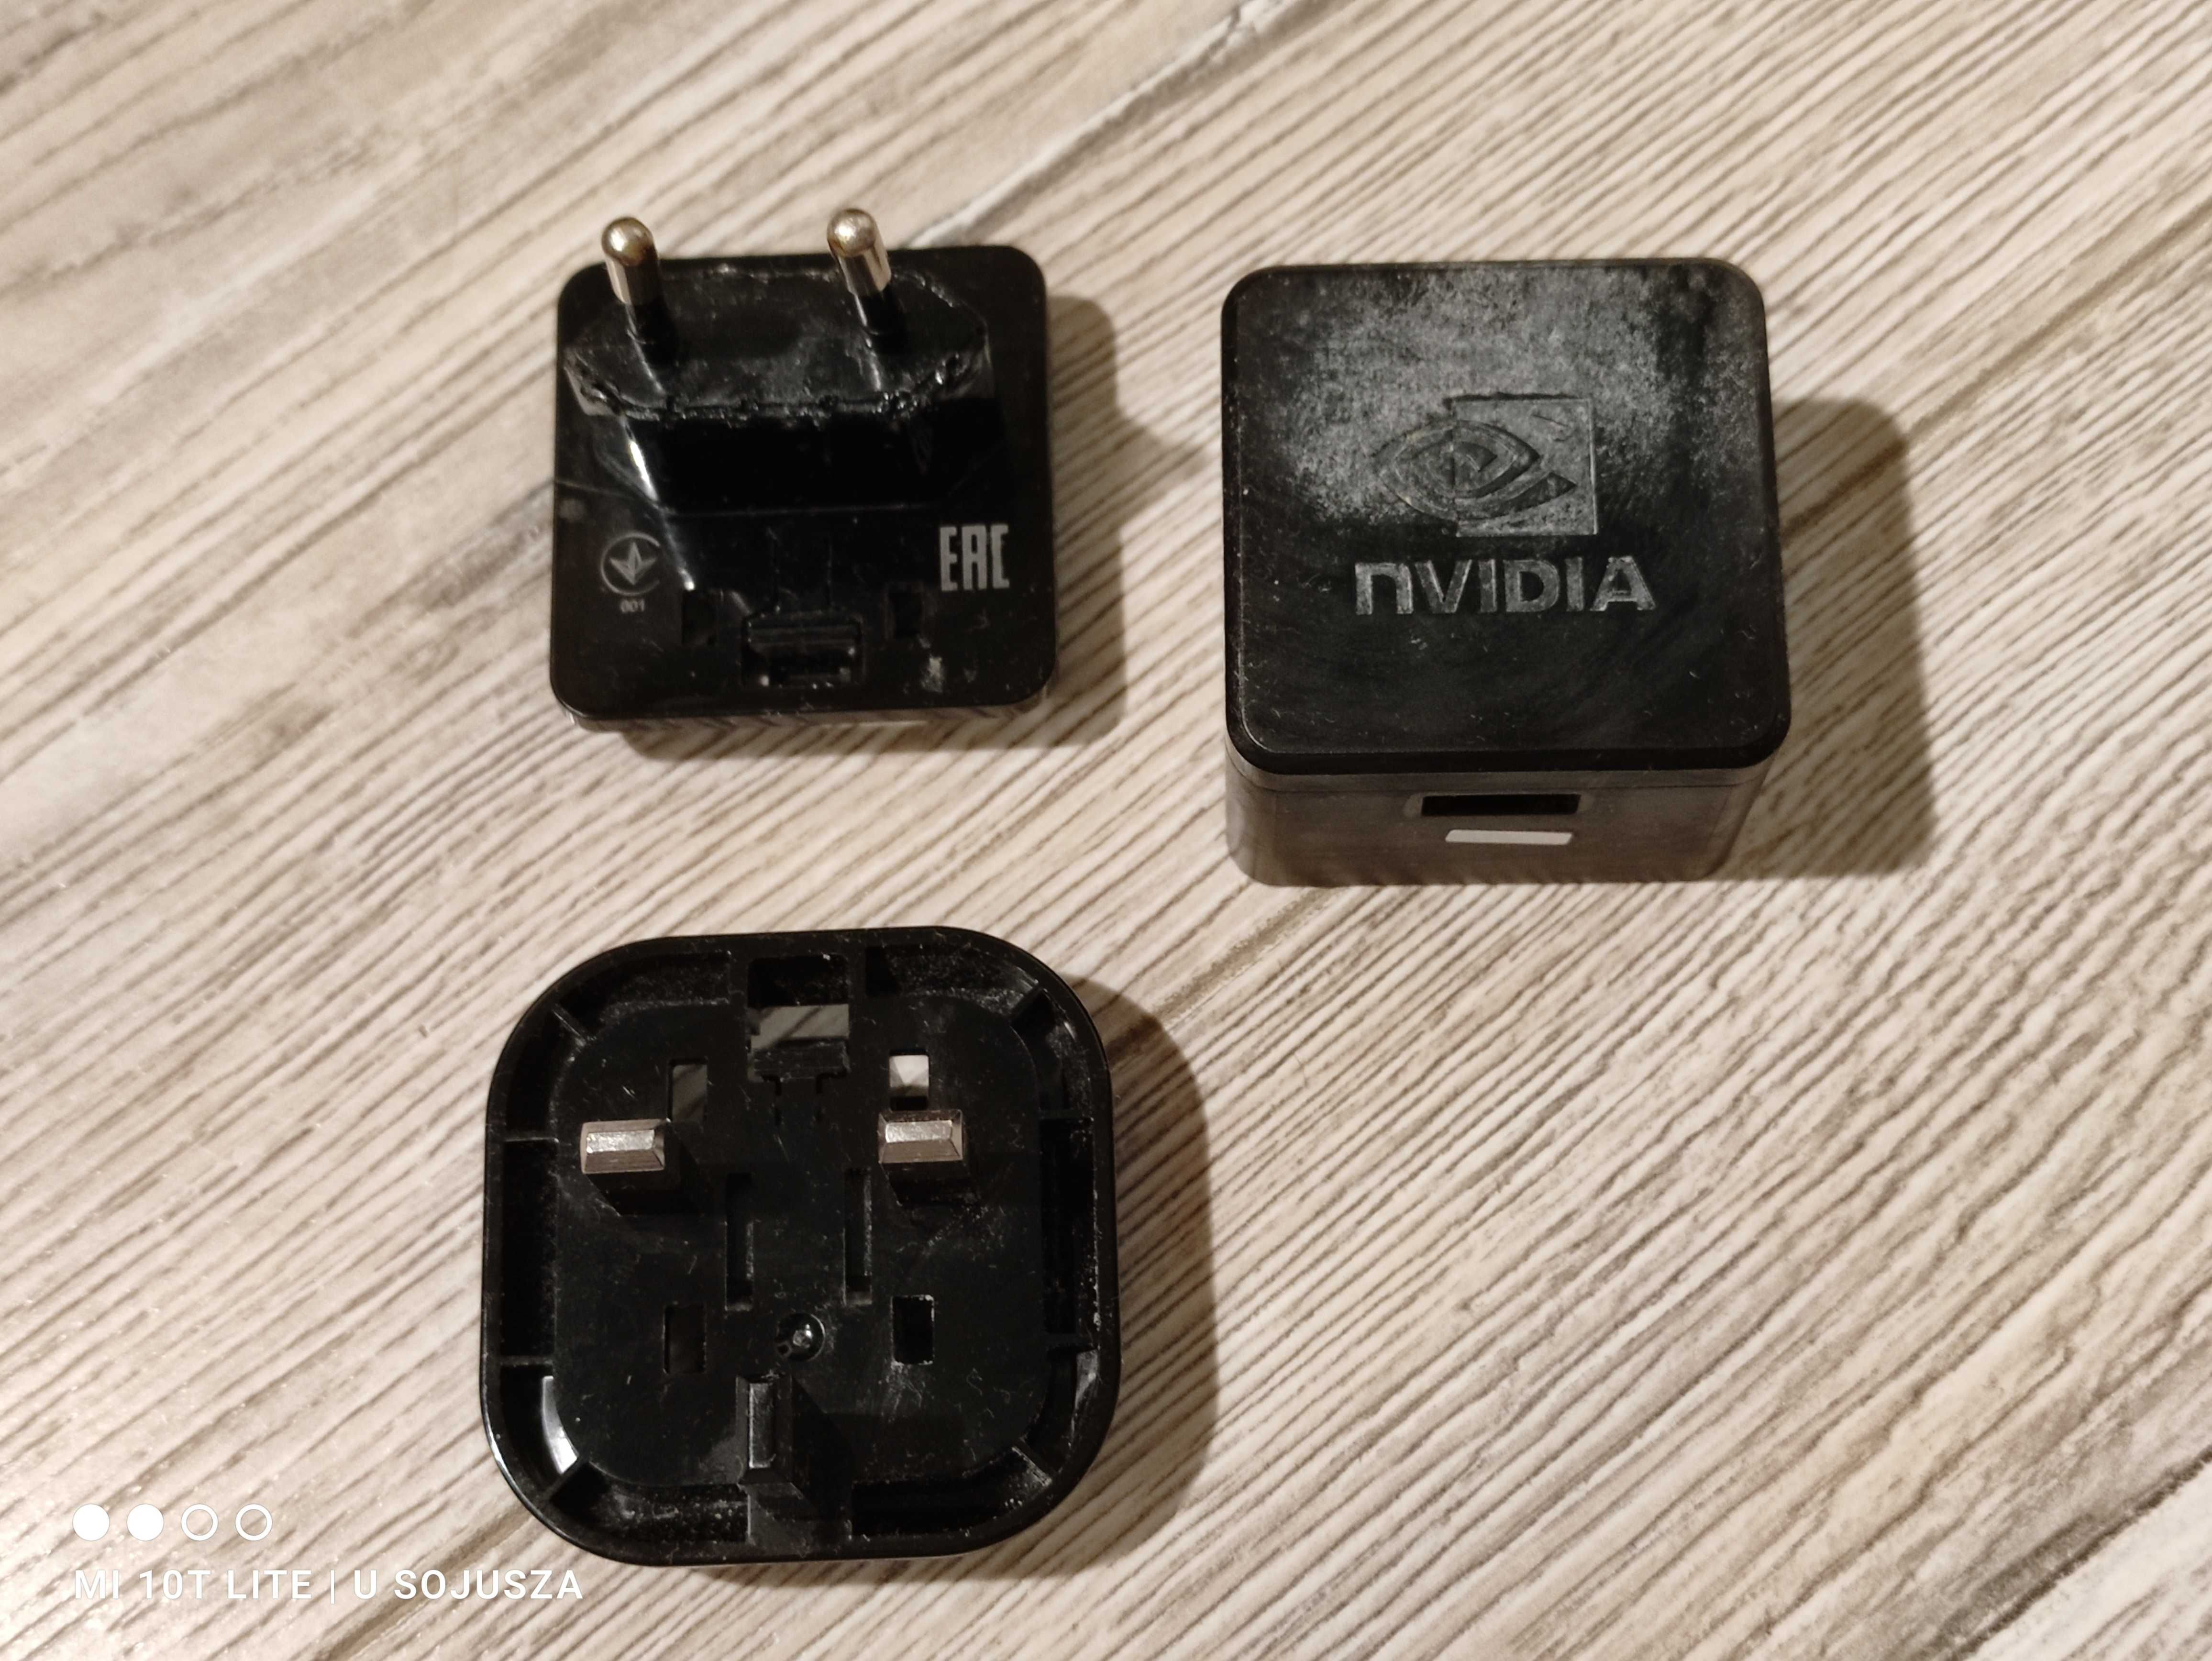 Tablet Nvidia Shield K1